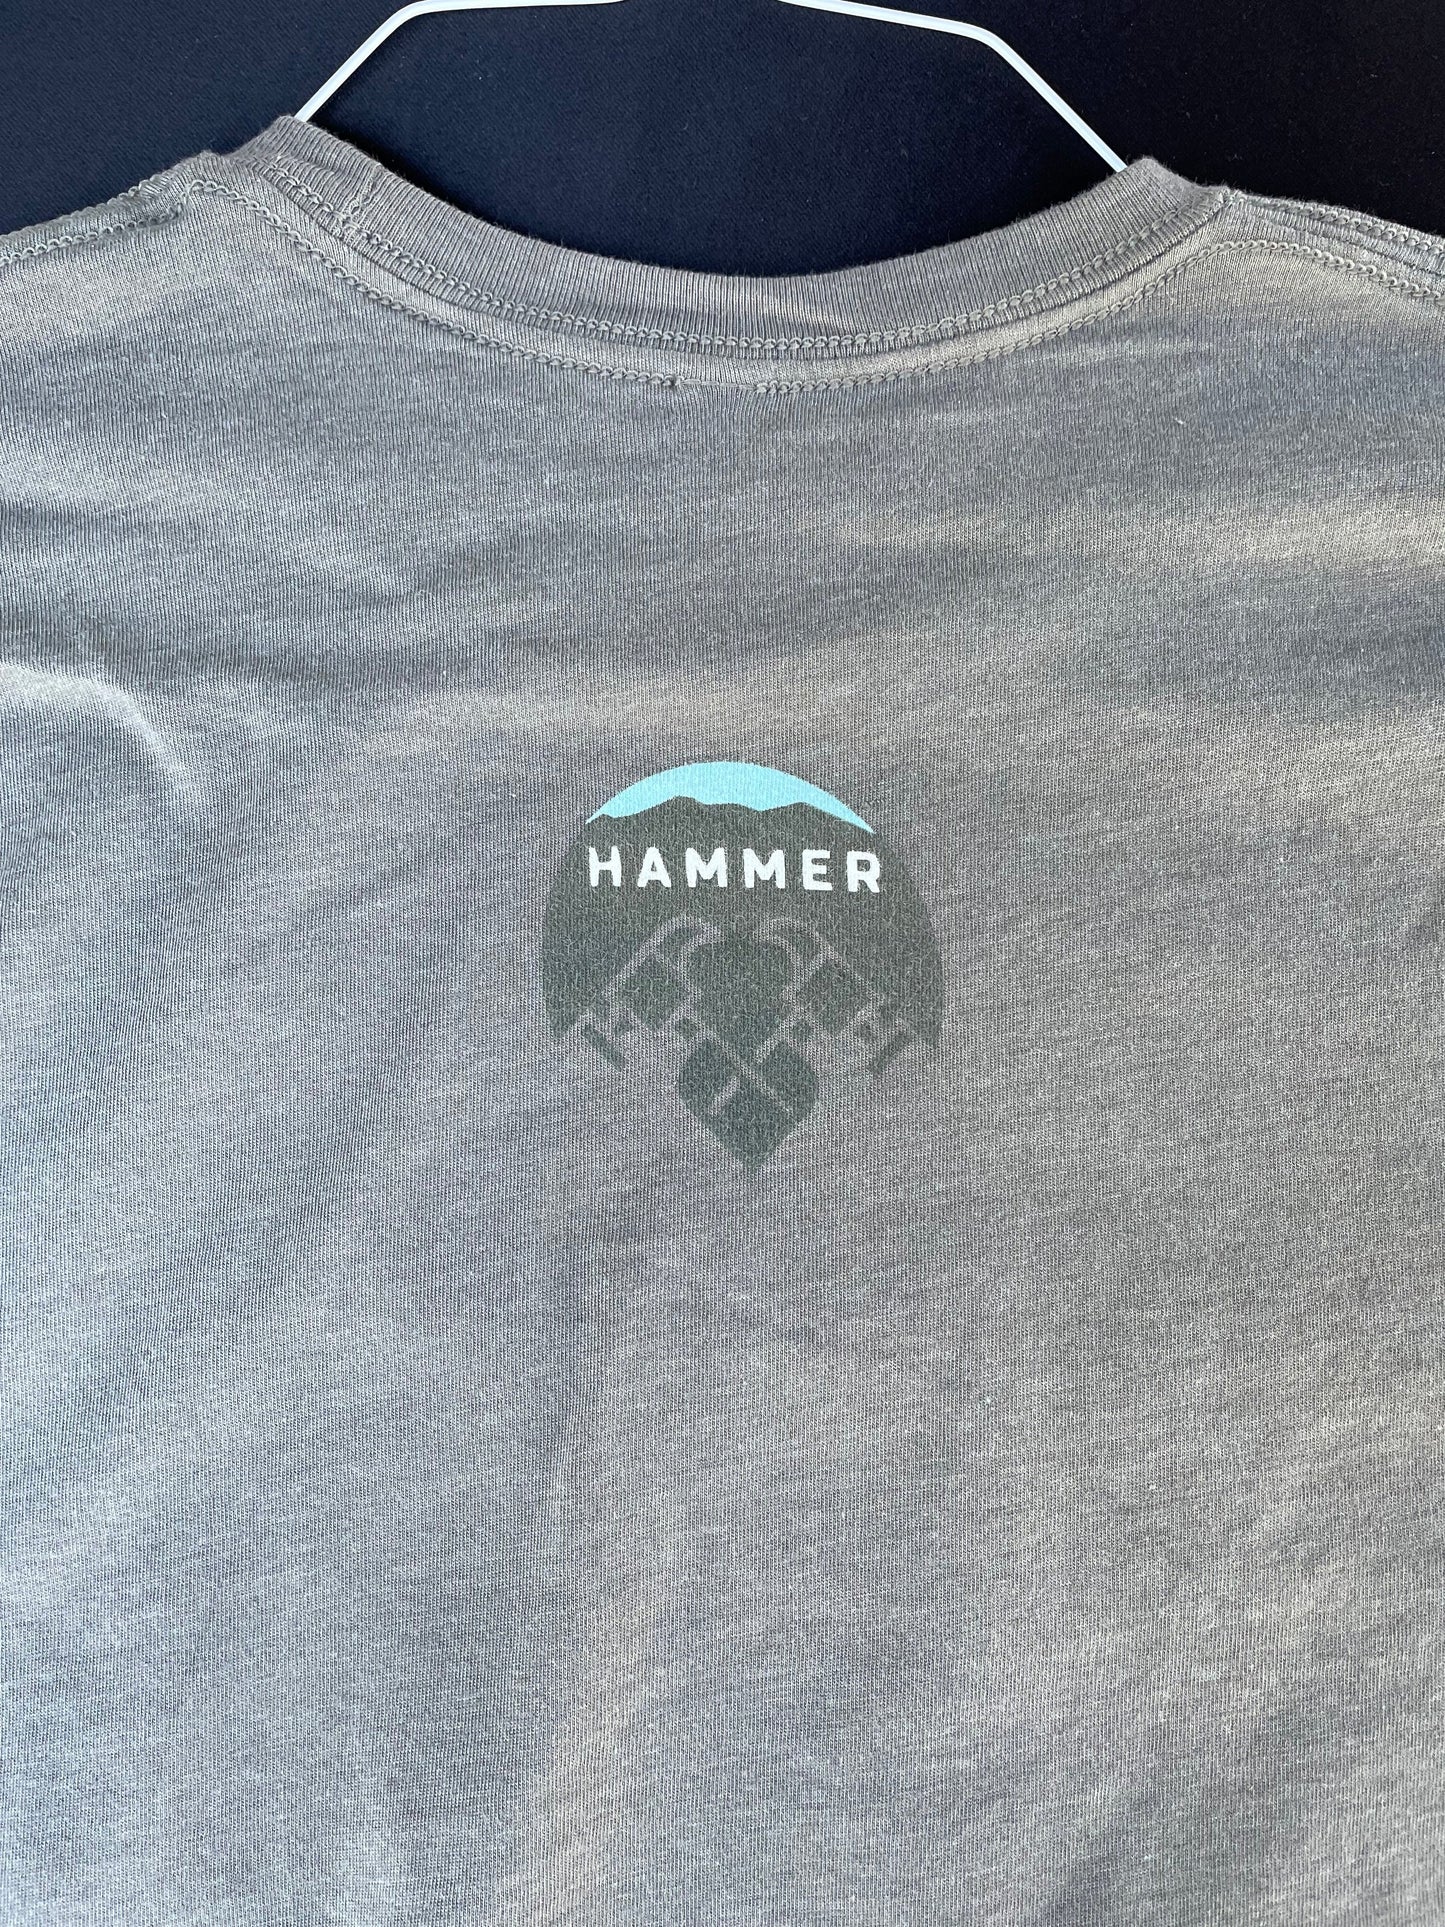 2021 Hammer Women's Commemorative T-Shirt